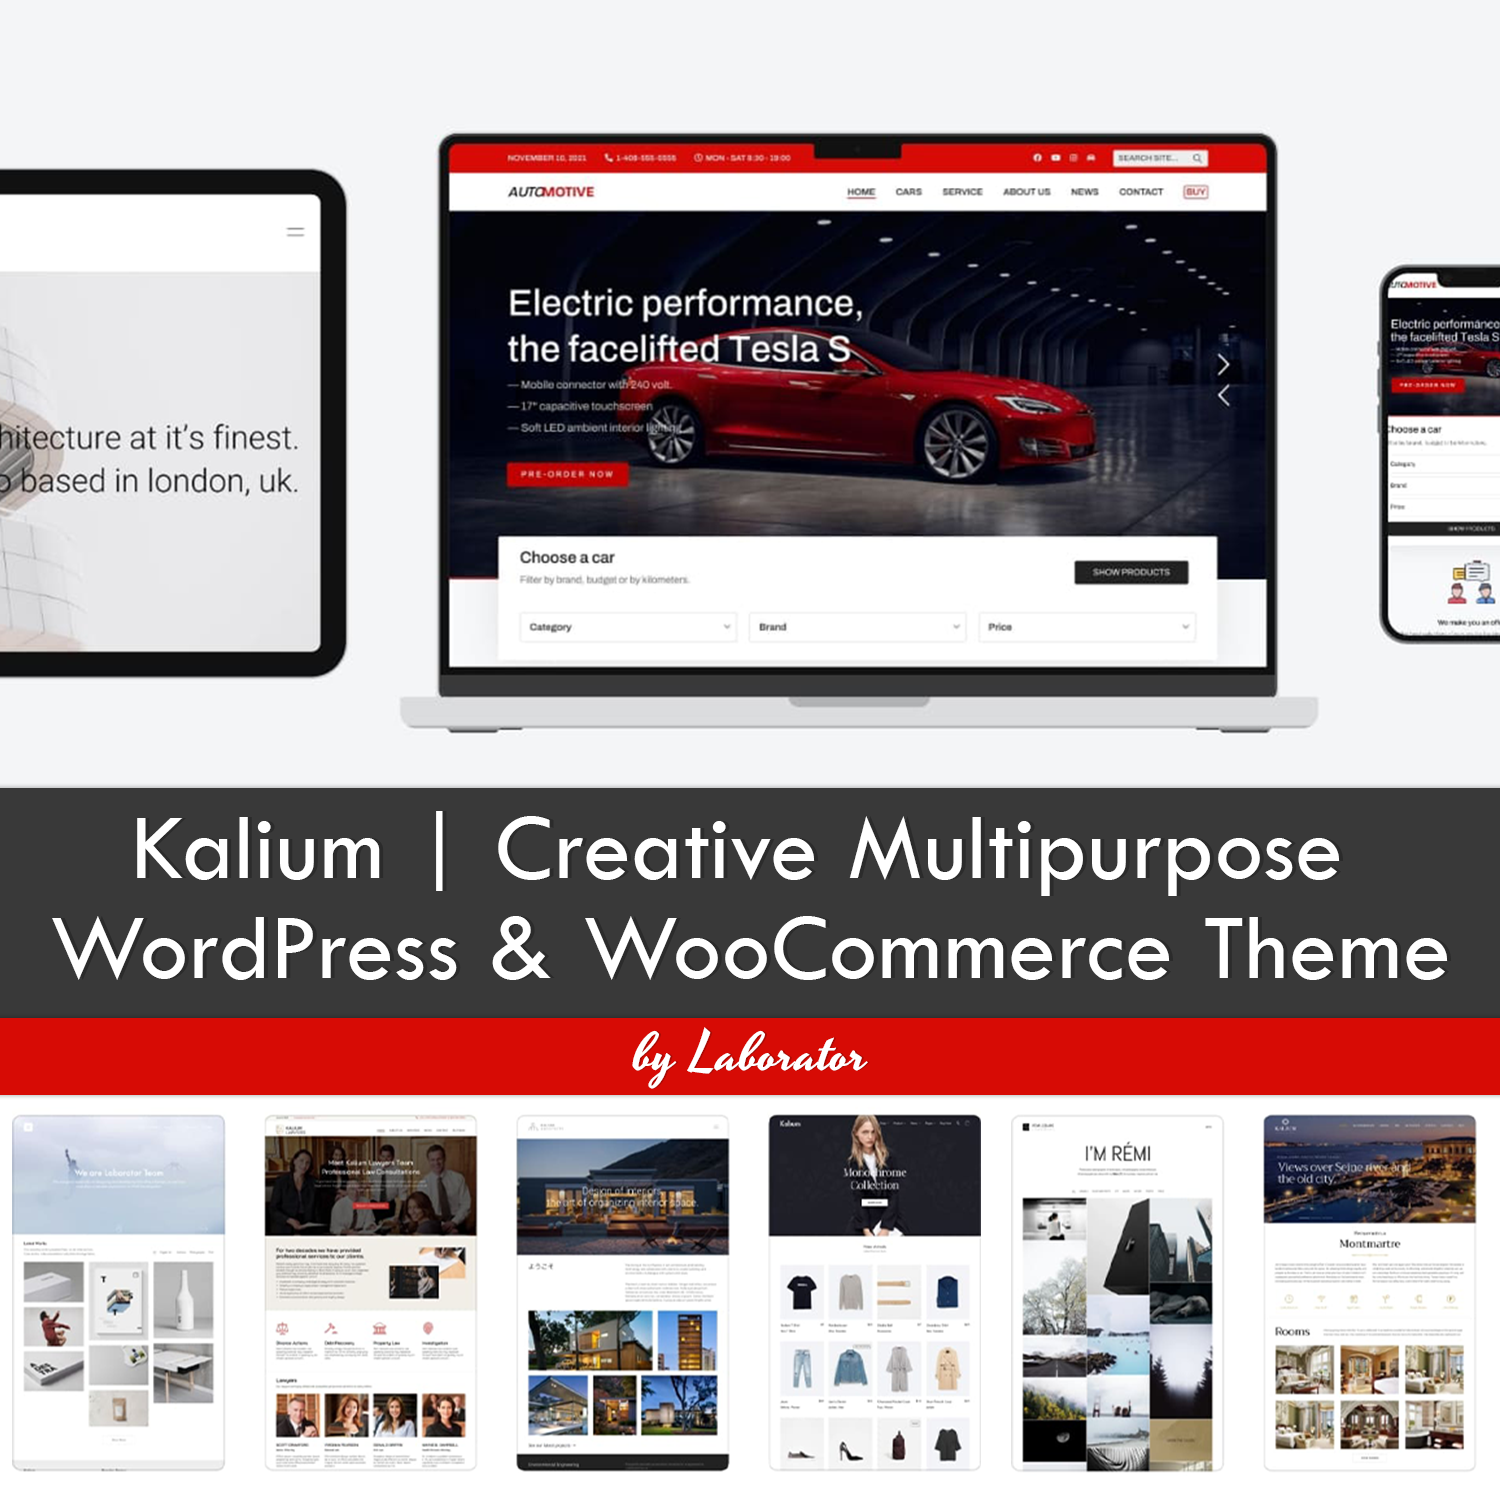 Images with kalium creative multipurpose wordpress woocommerce theme.